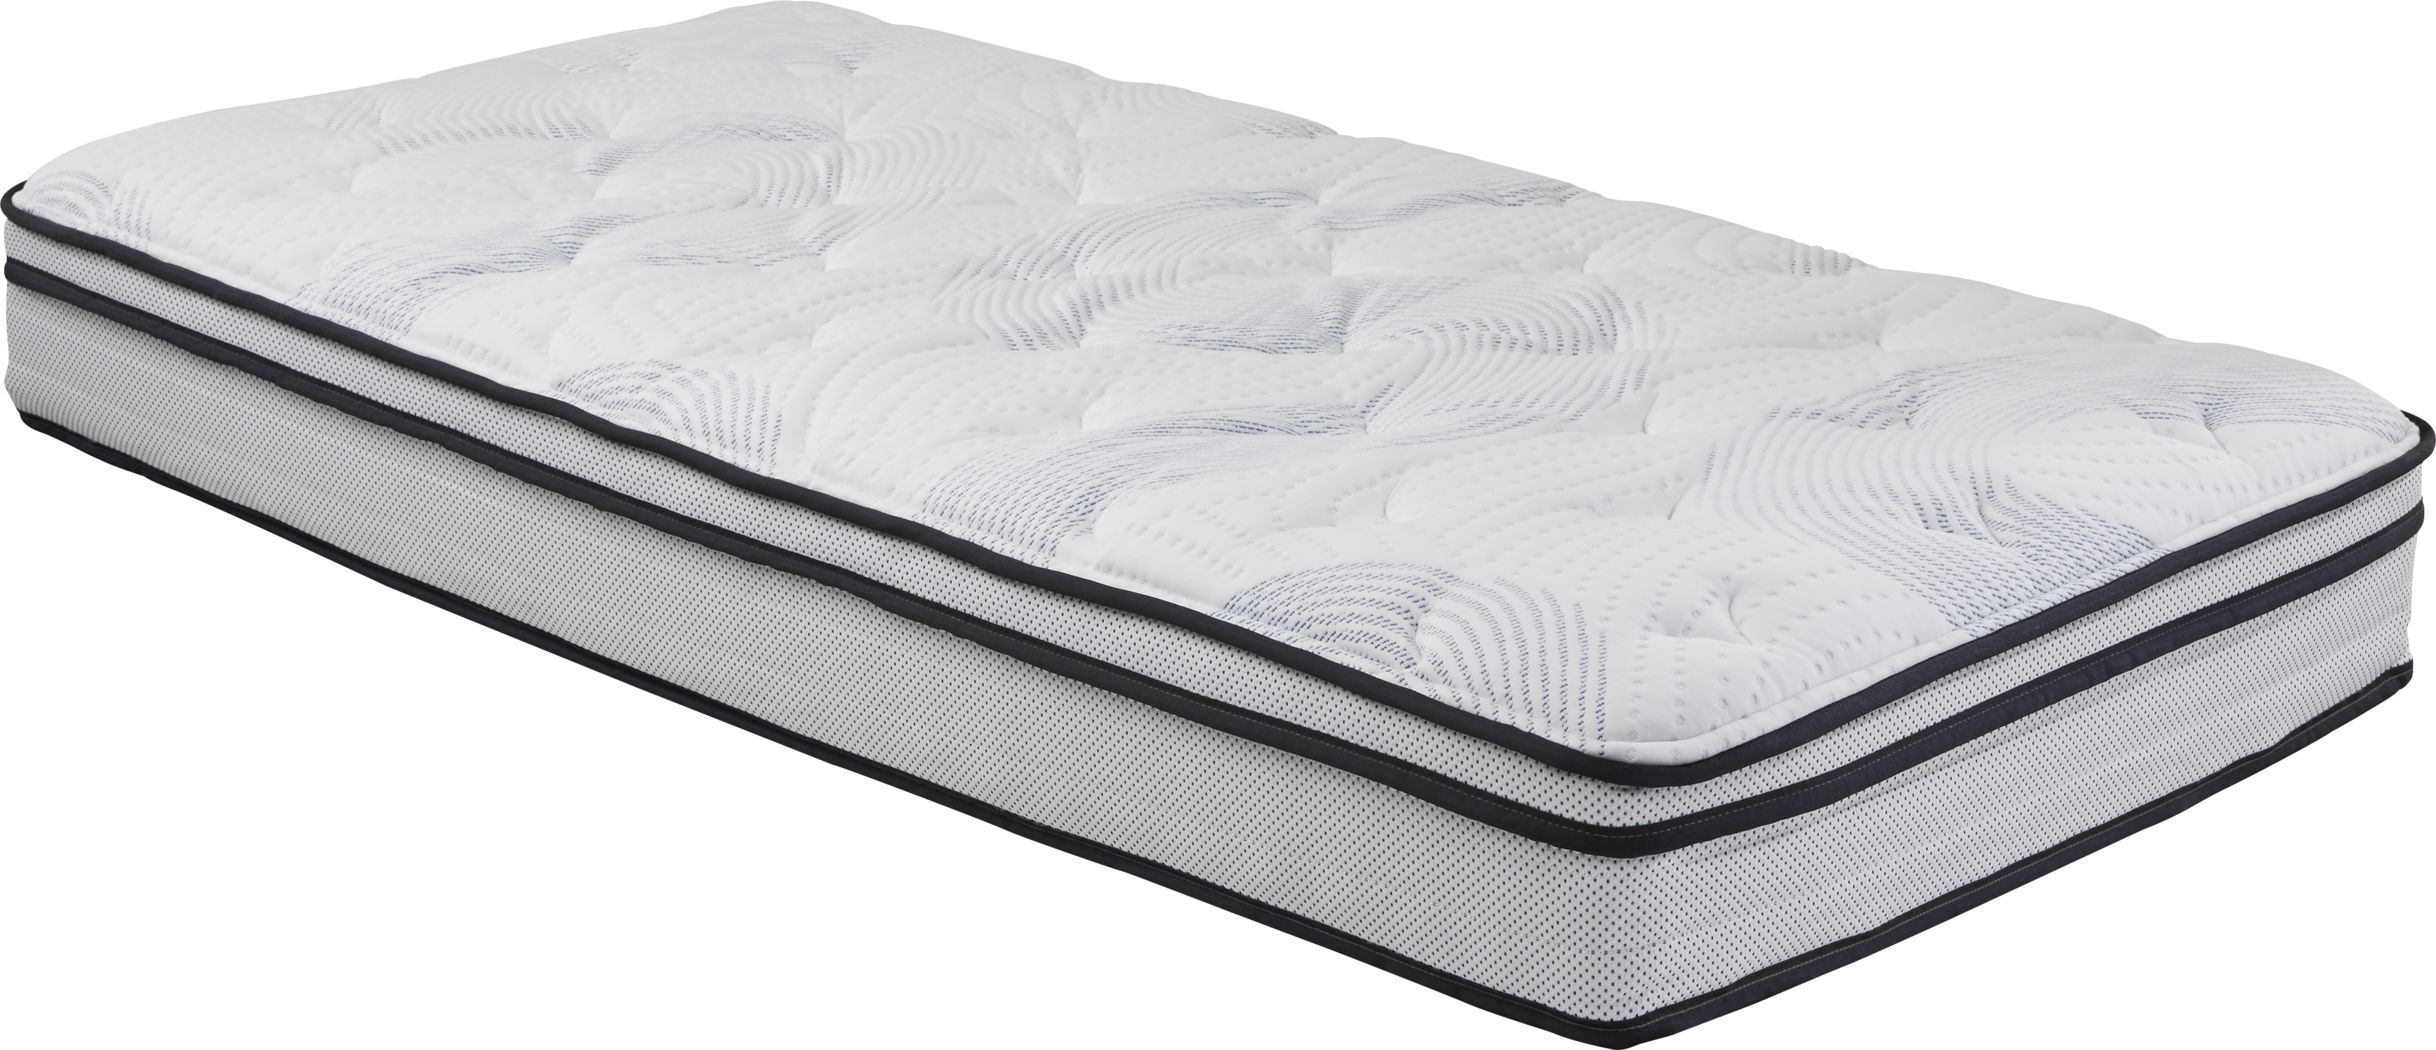 low price twin size mattress grants pass